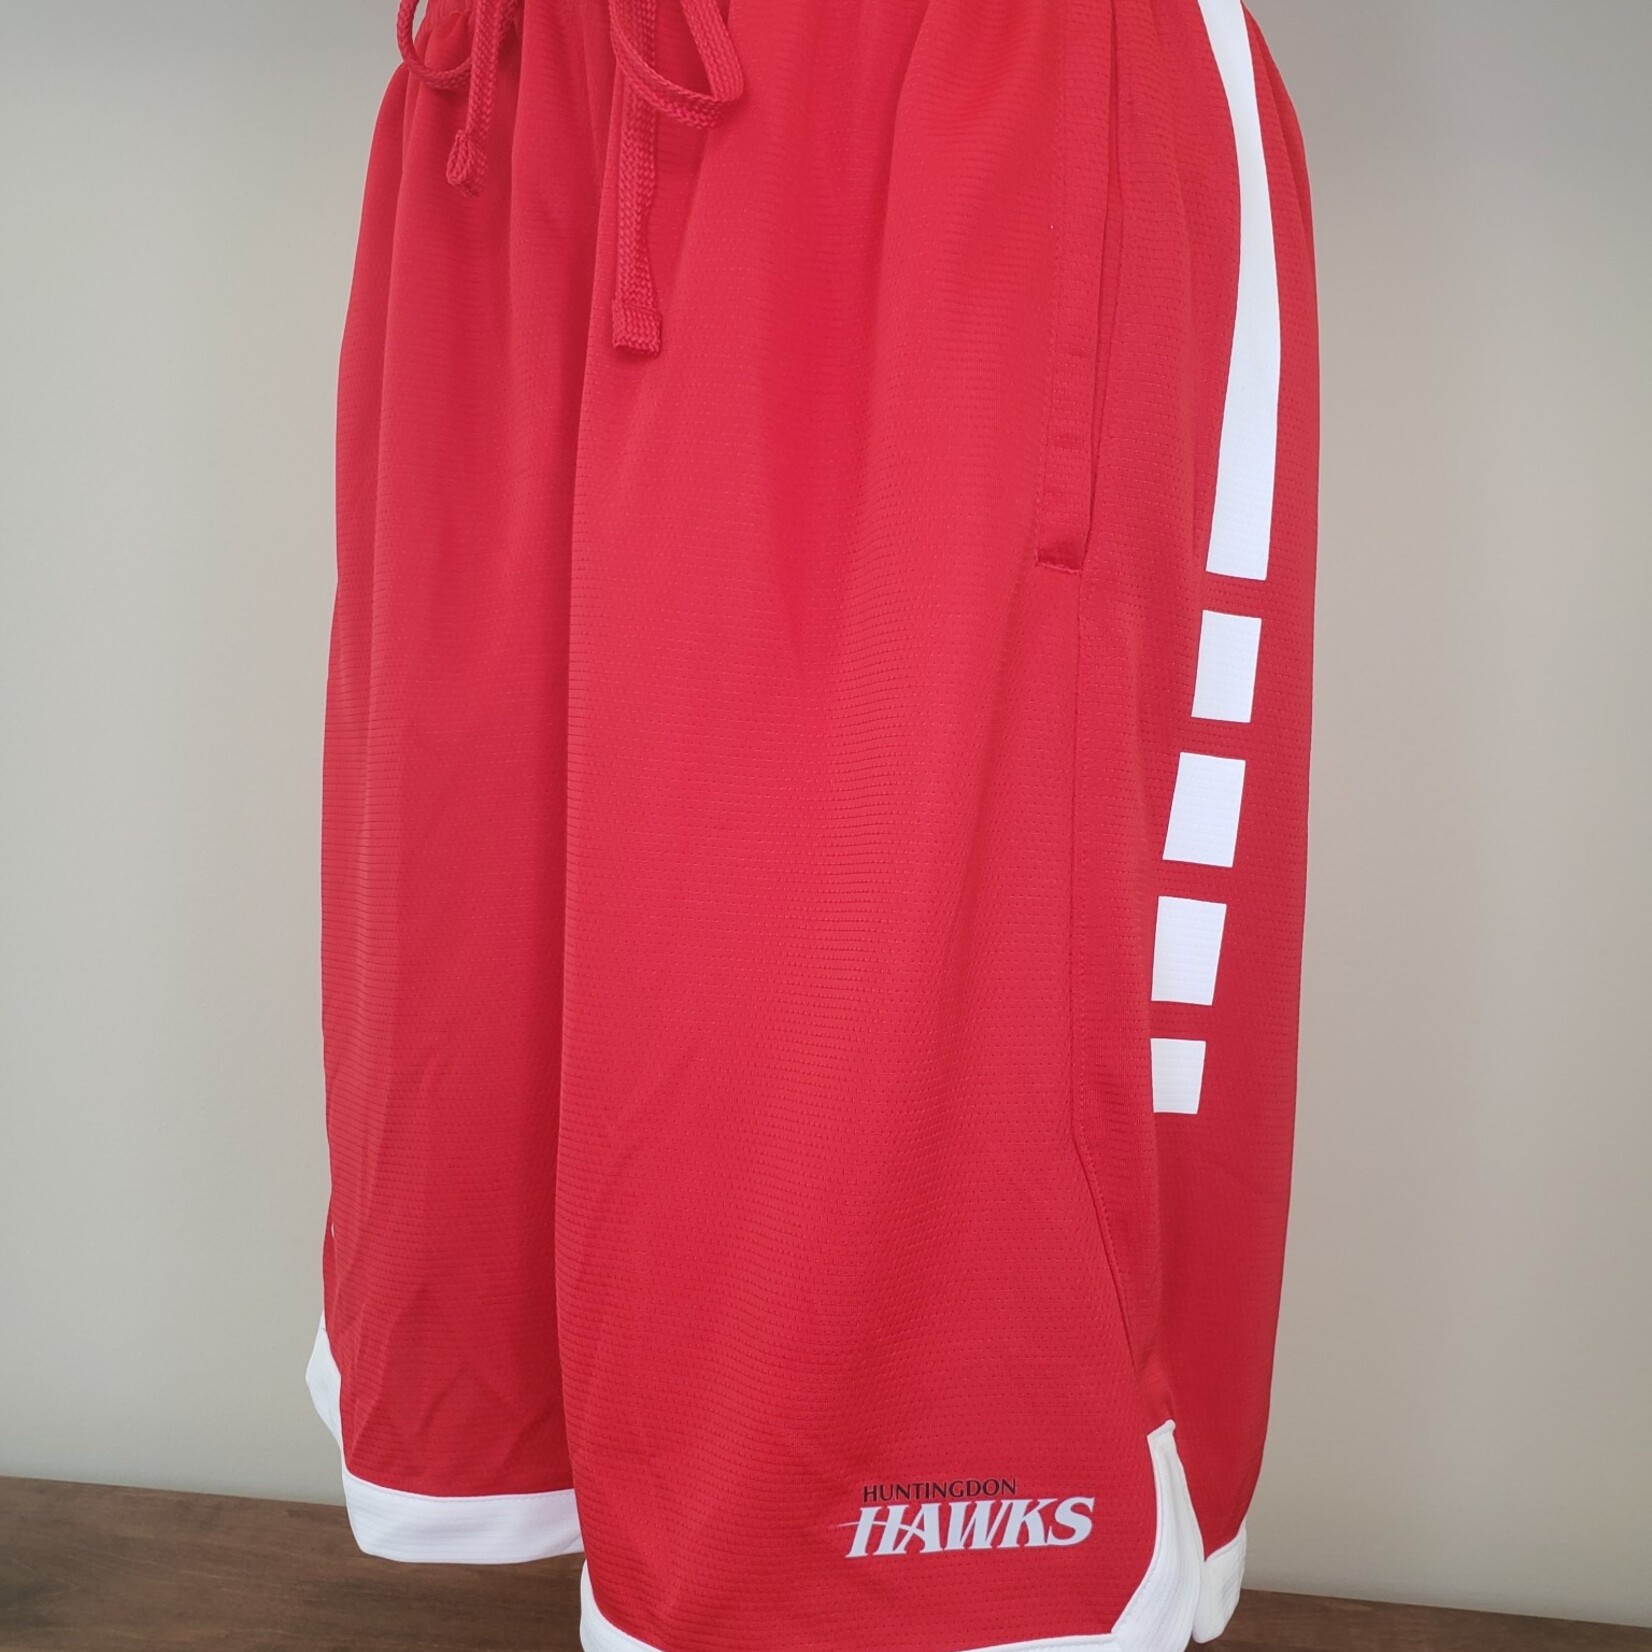 Hawks Nike Dri-Fit Shorts with Stripe Detail